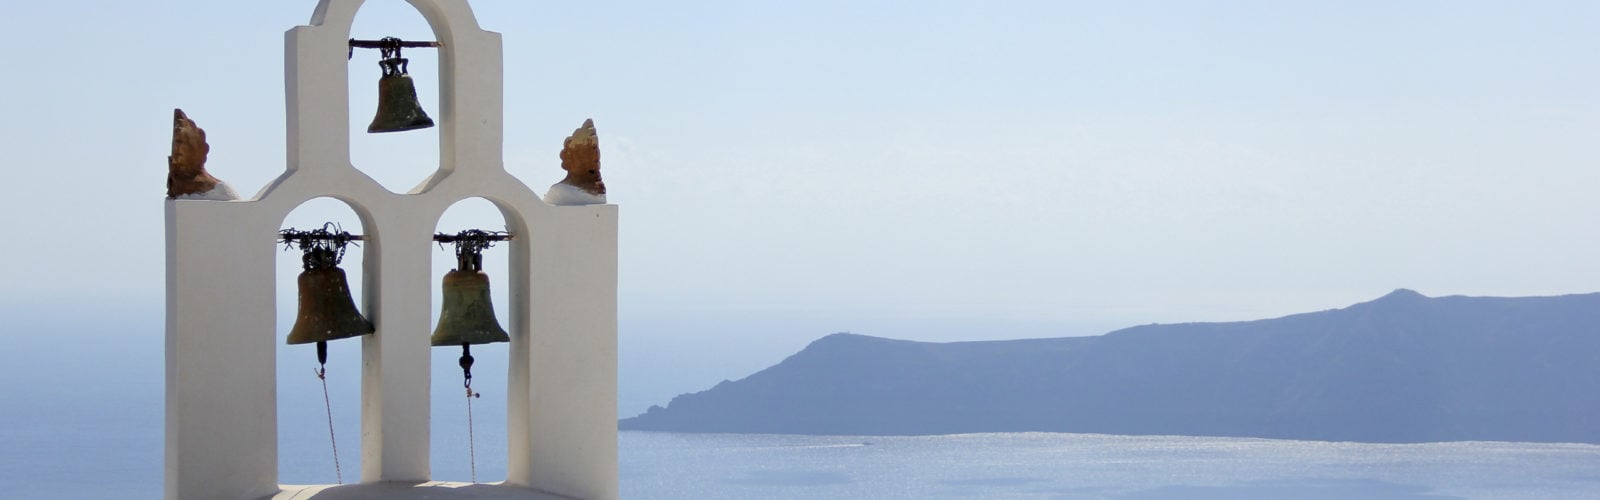 Views from Santorini island